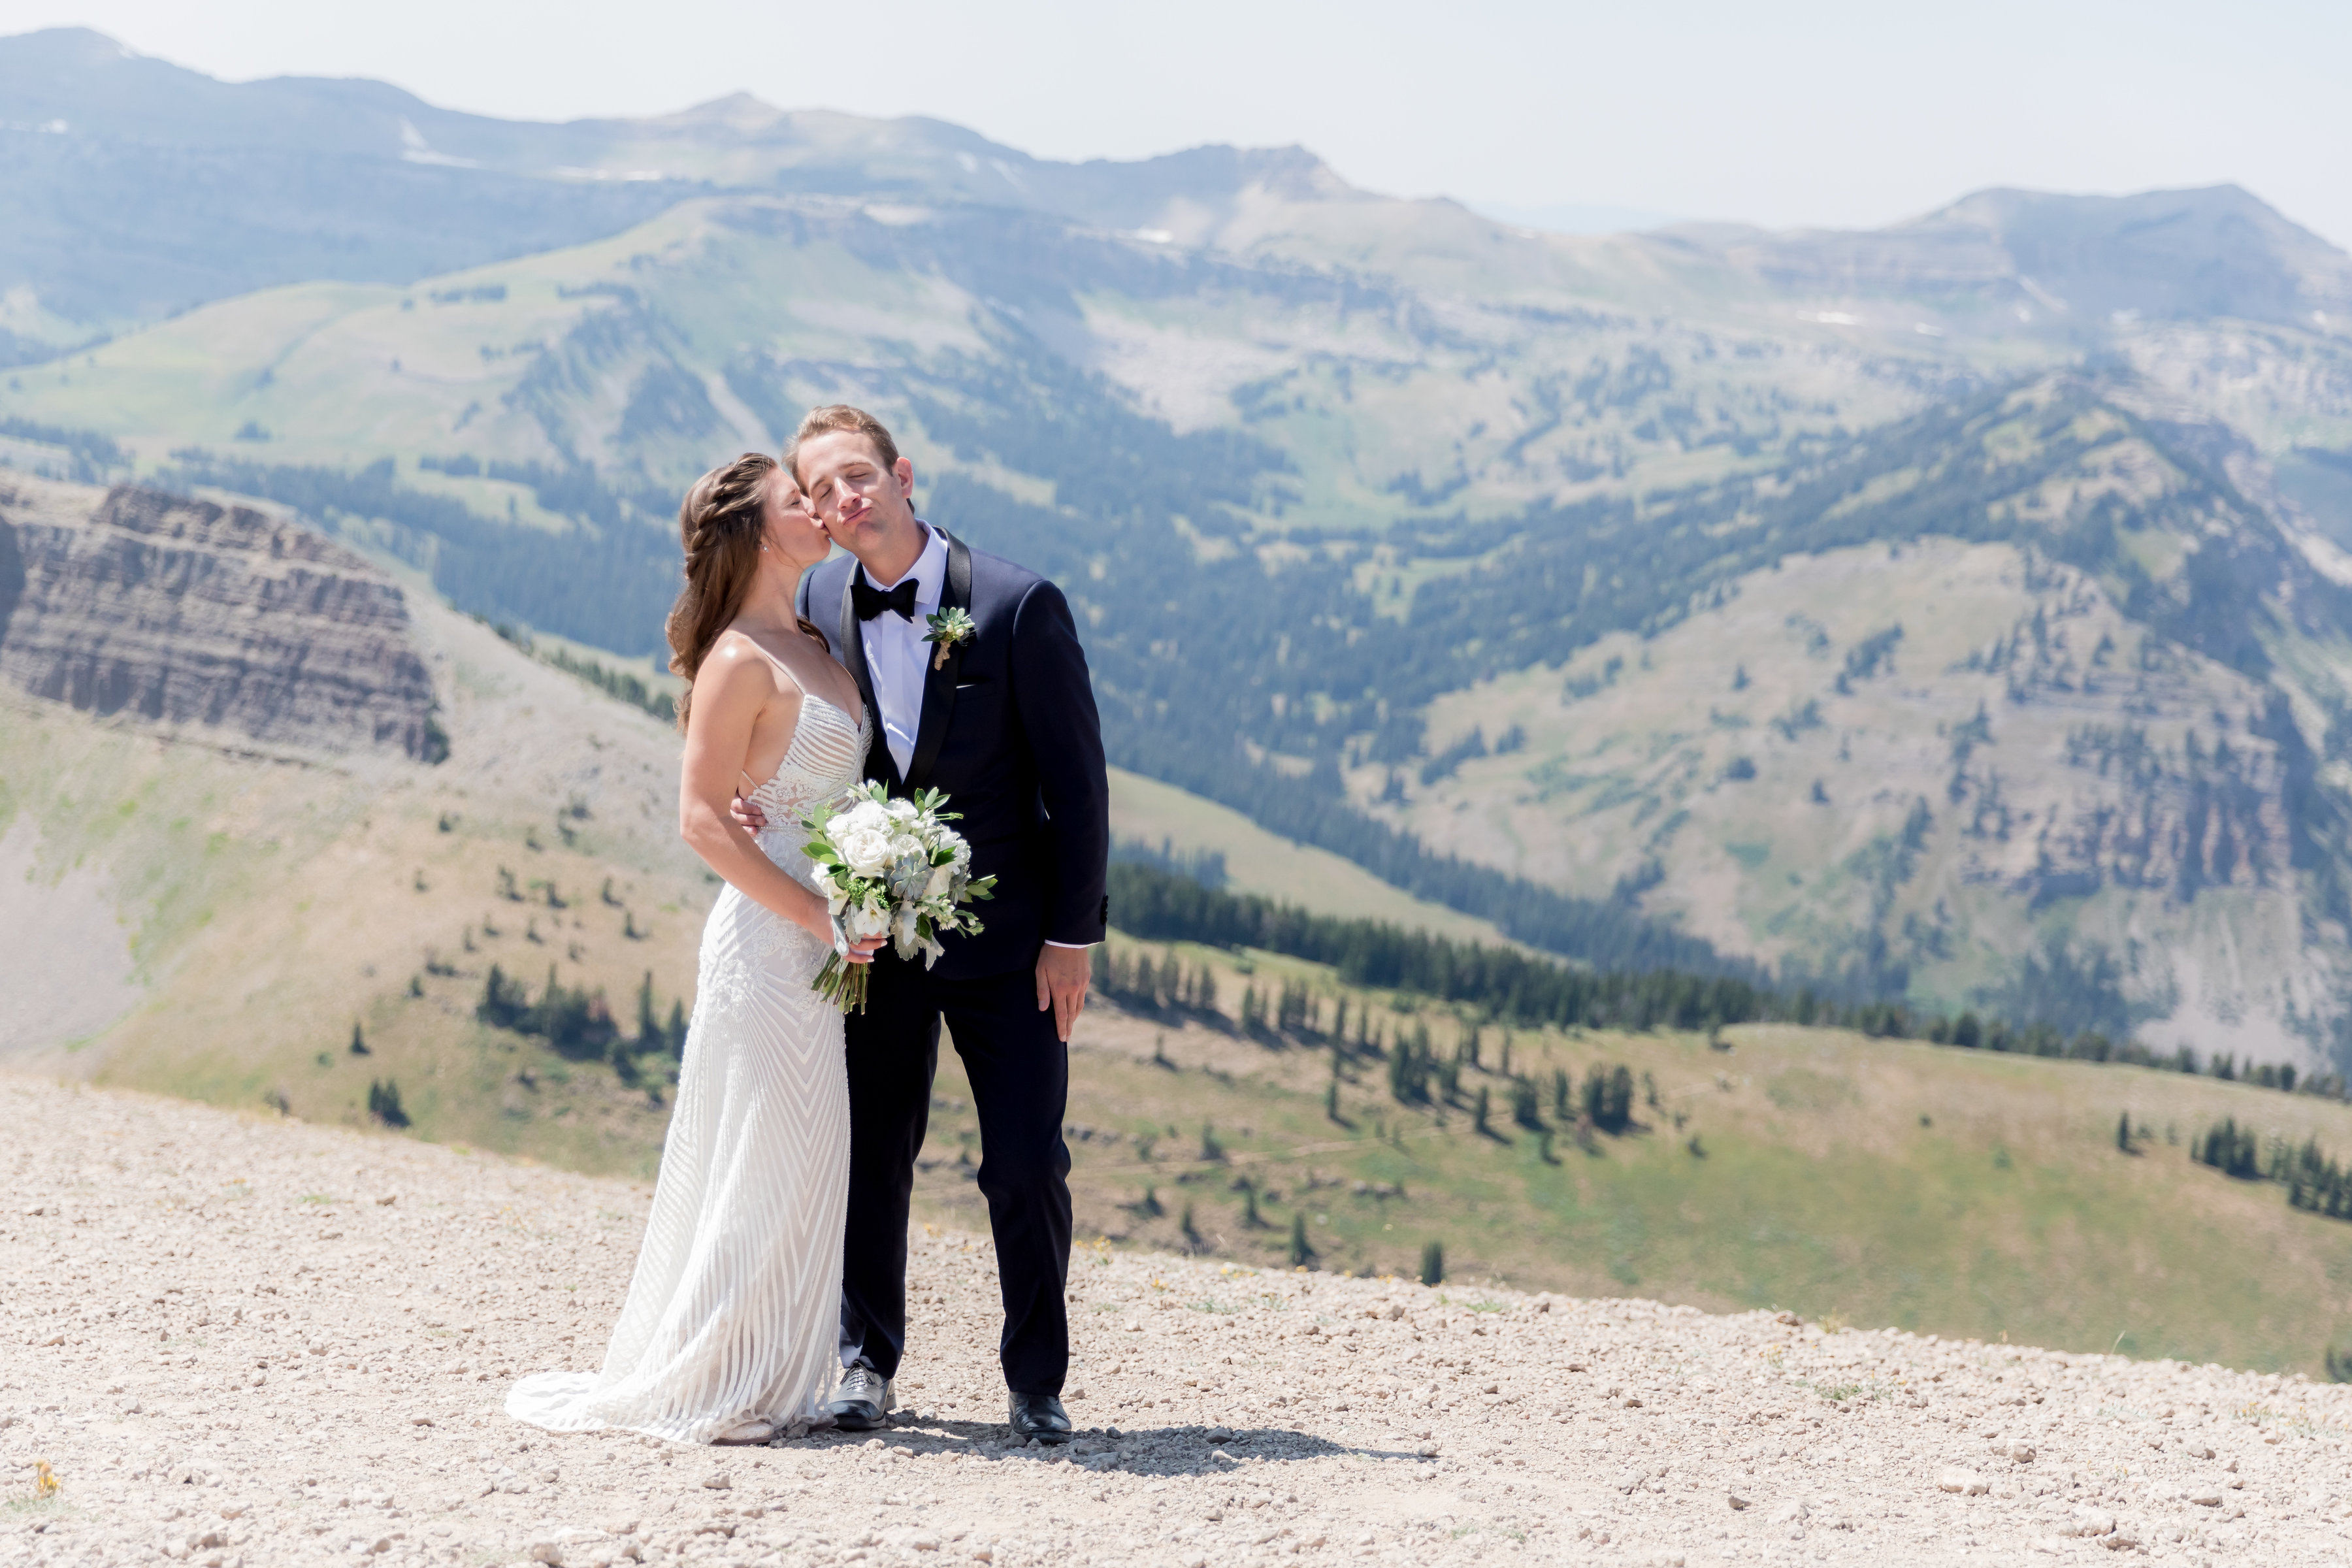 Jackson Wyoming wedding kiss